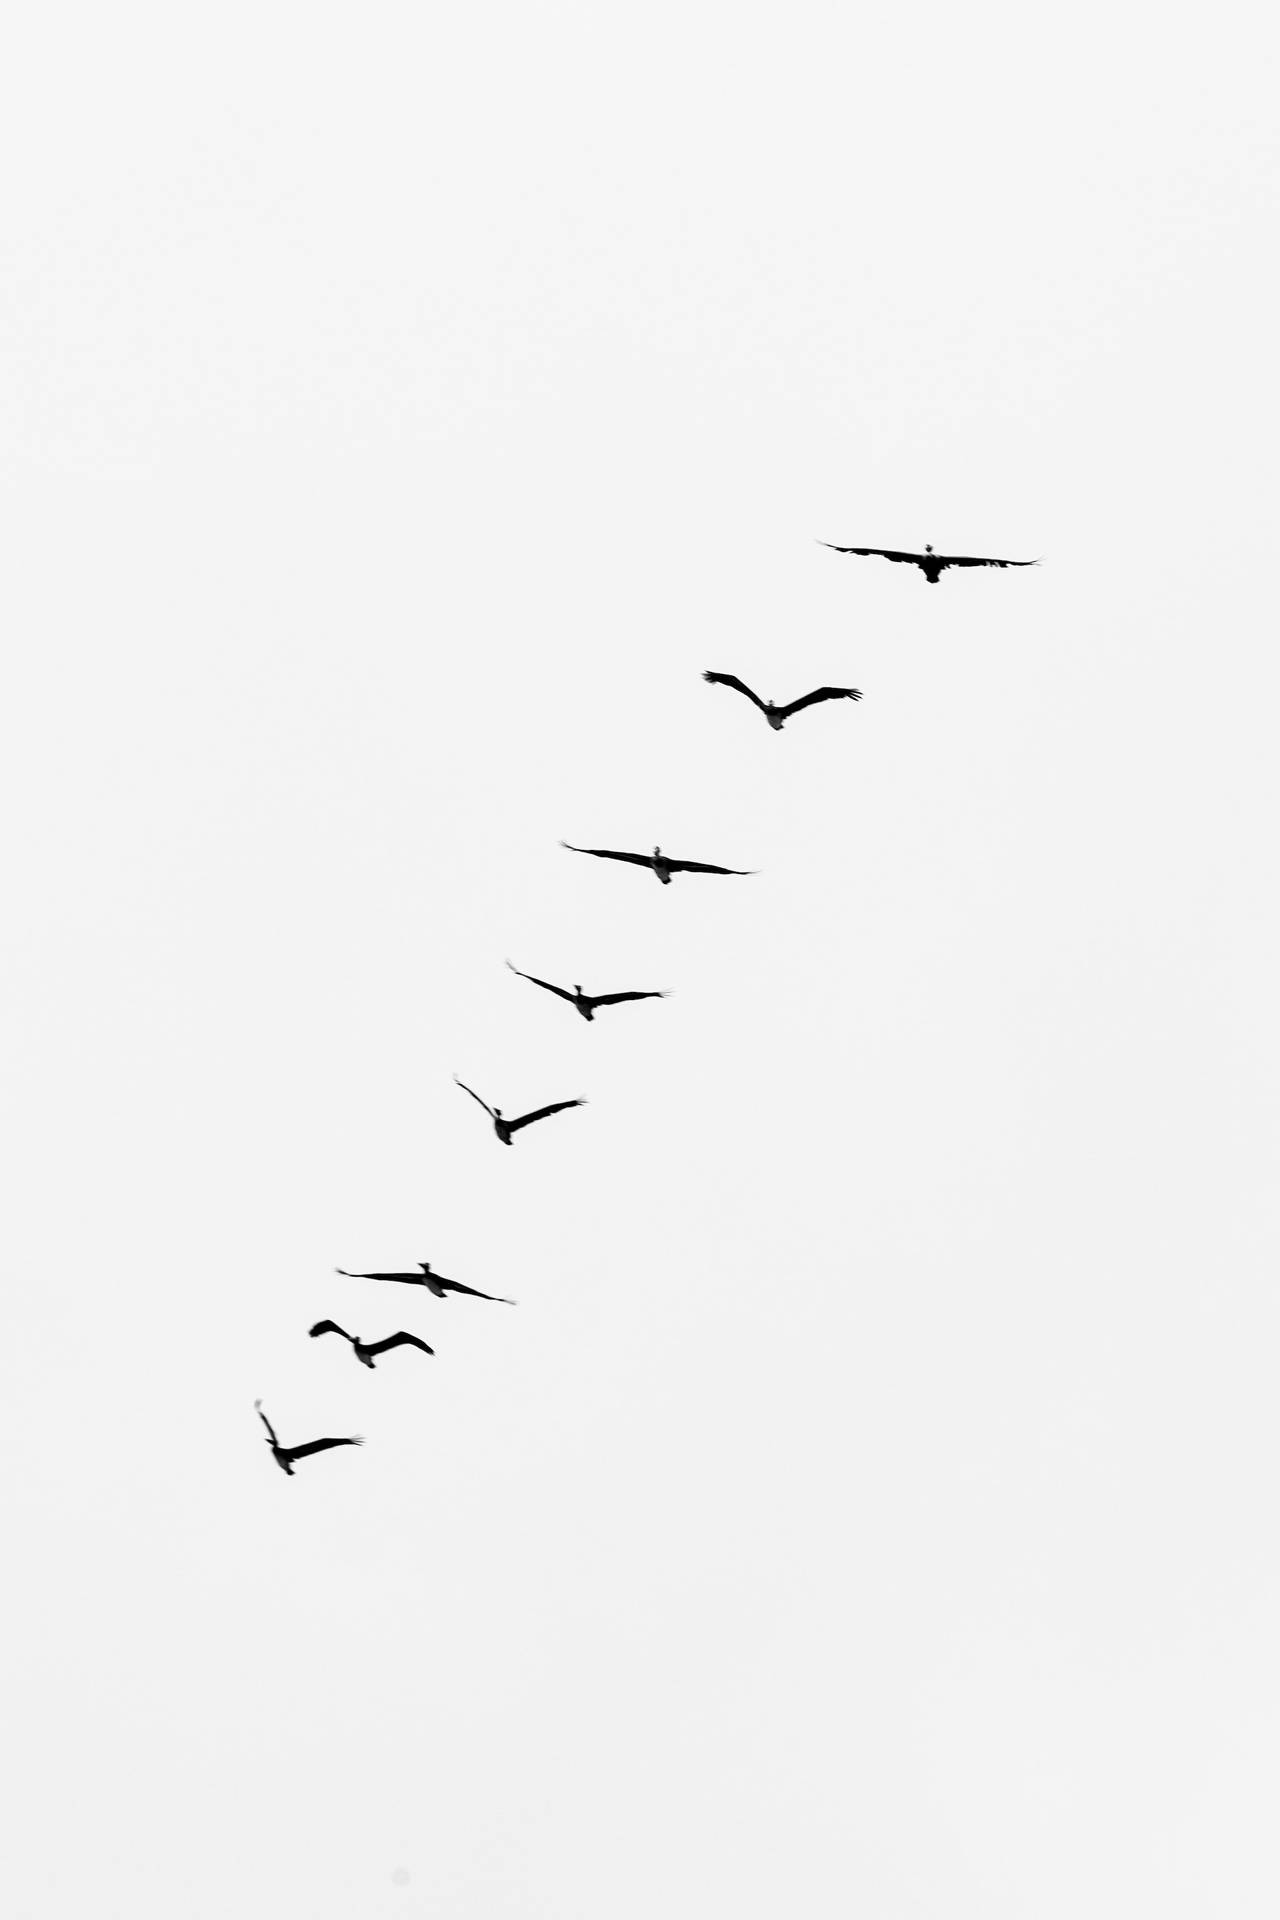 Birds Flying In One Line Wallpaper